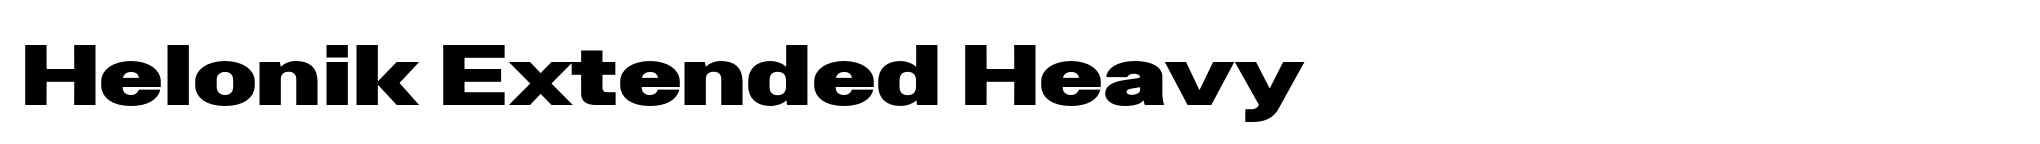 Helonik Extended Heavy image